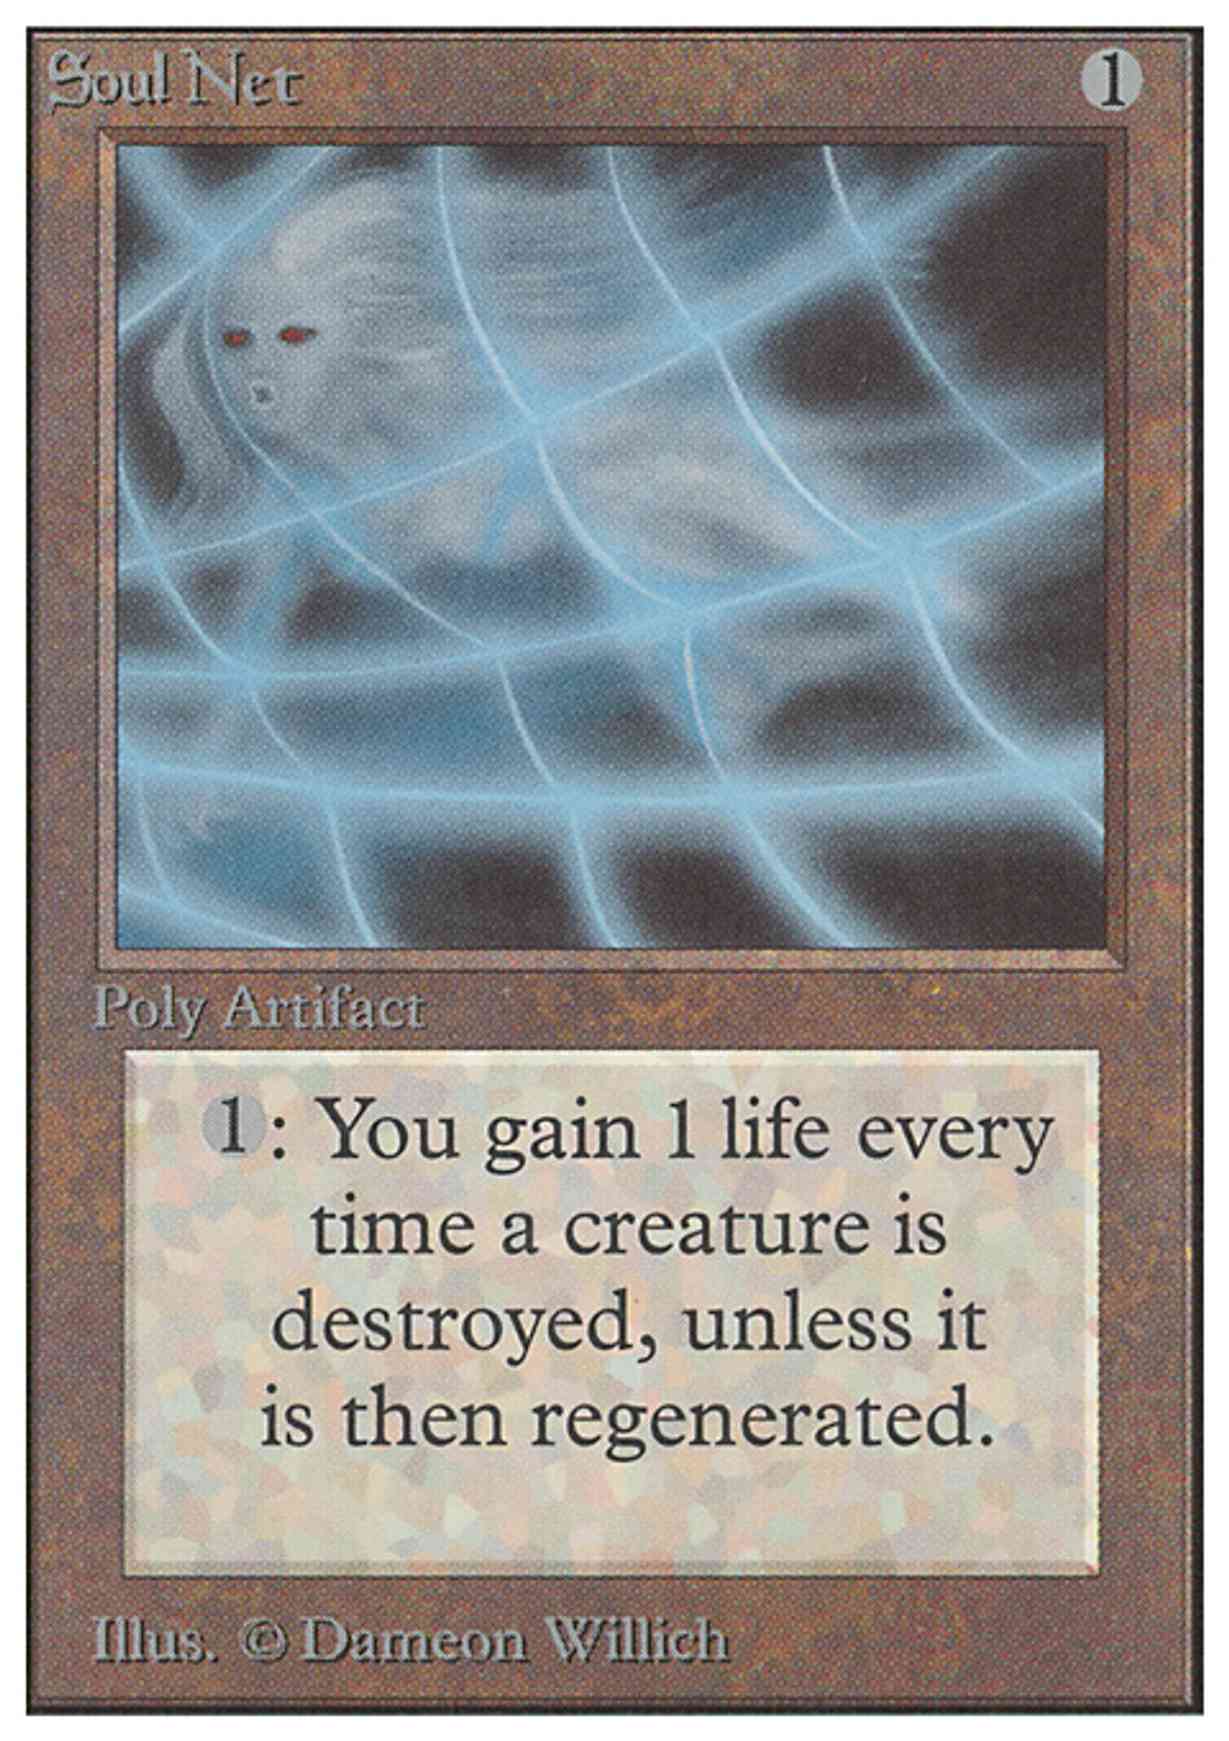 Soul Net magic card front